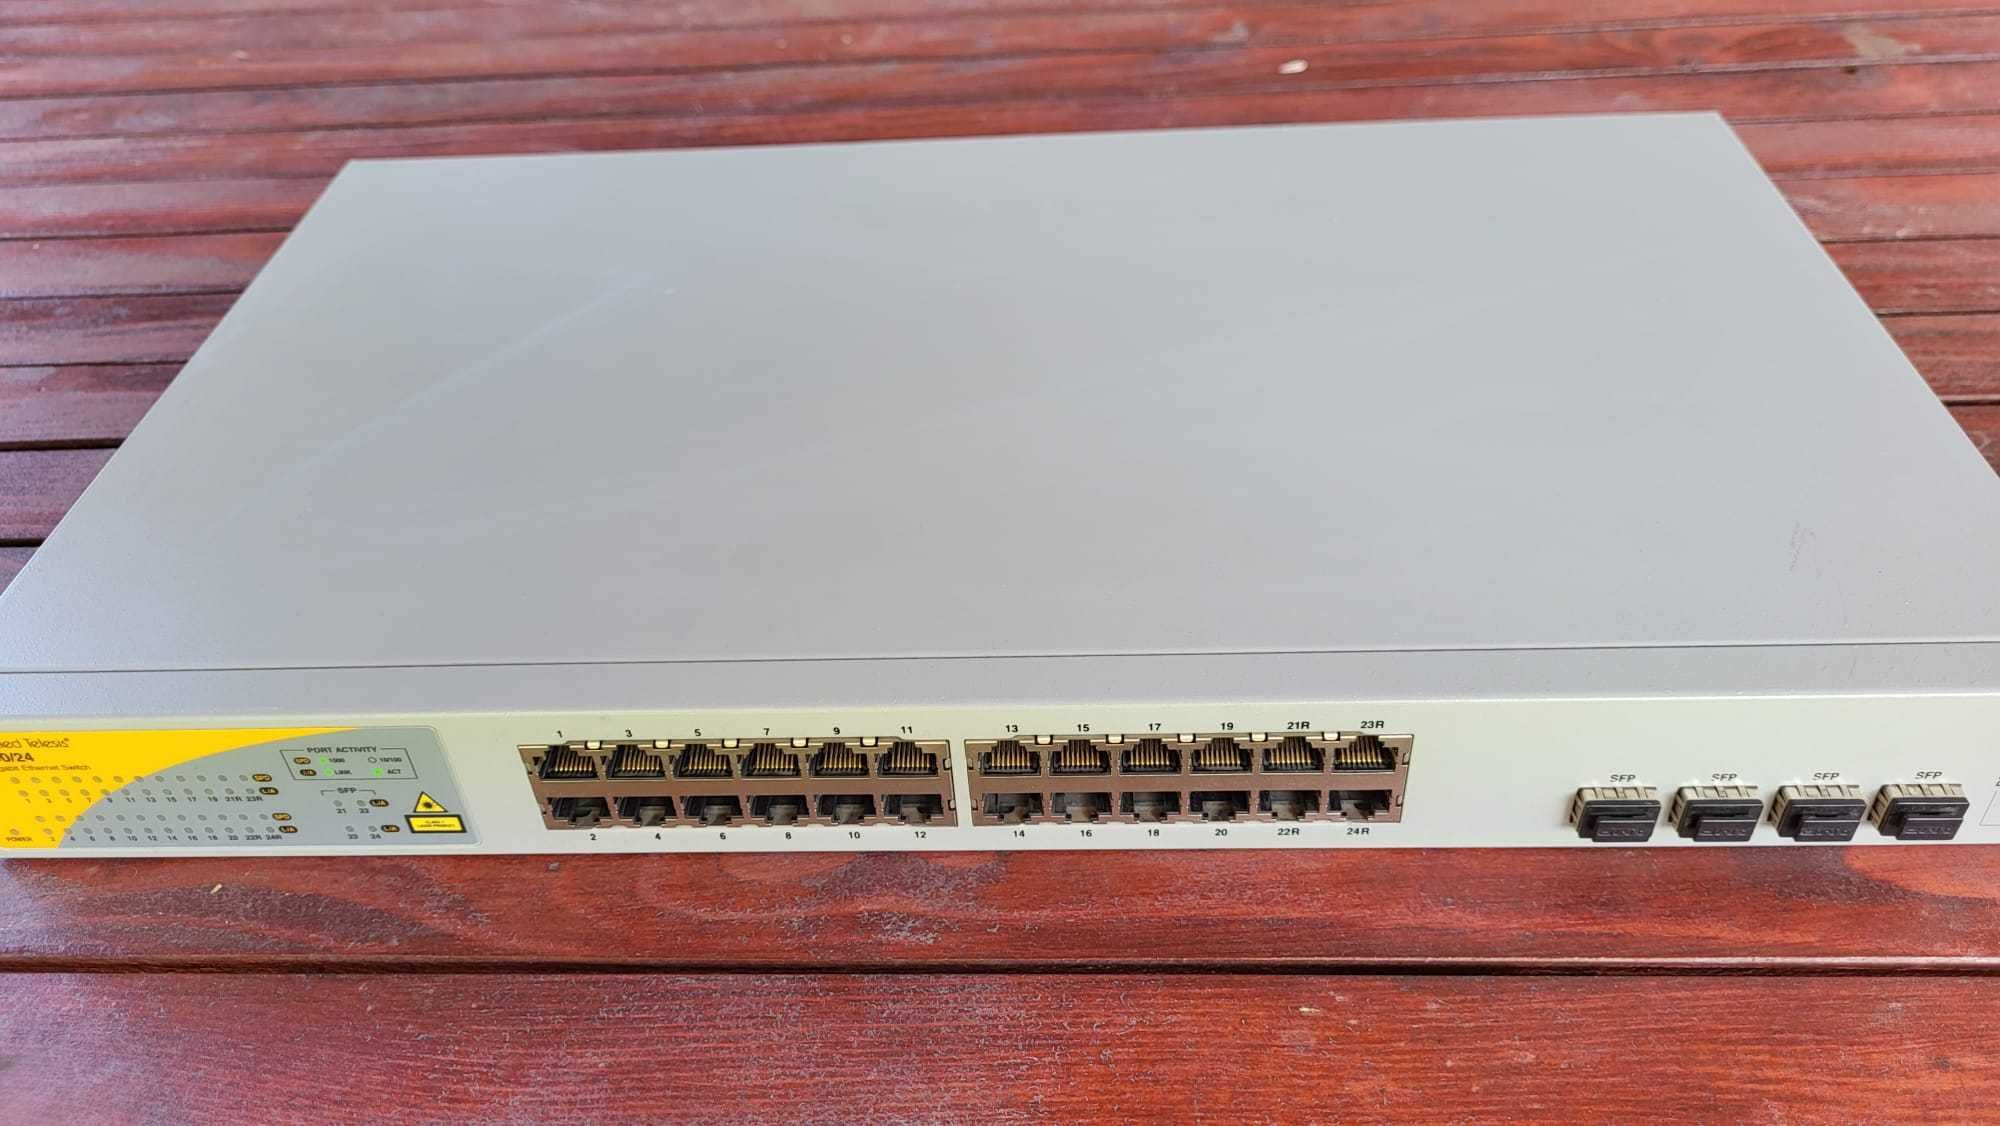 Switch Allied Telesis 24 port Layer 2 Managed Gigabit Ethernet Switch